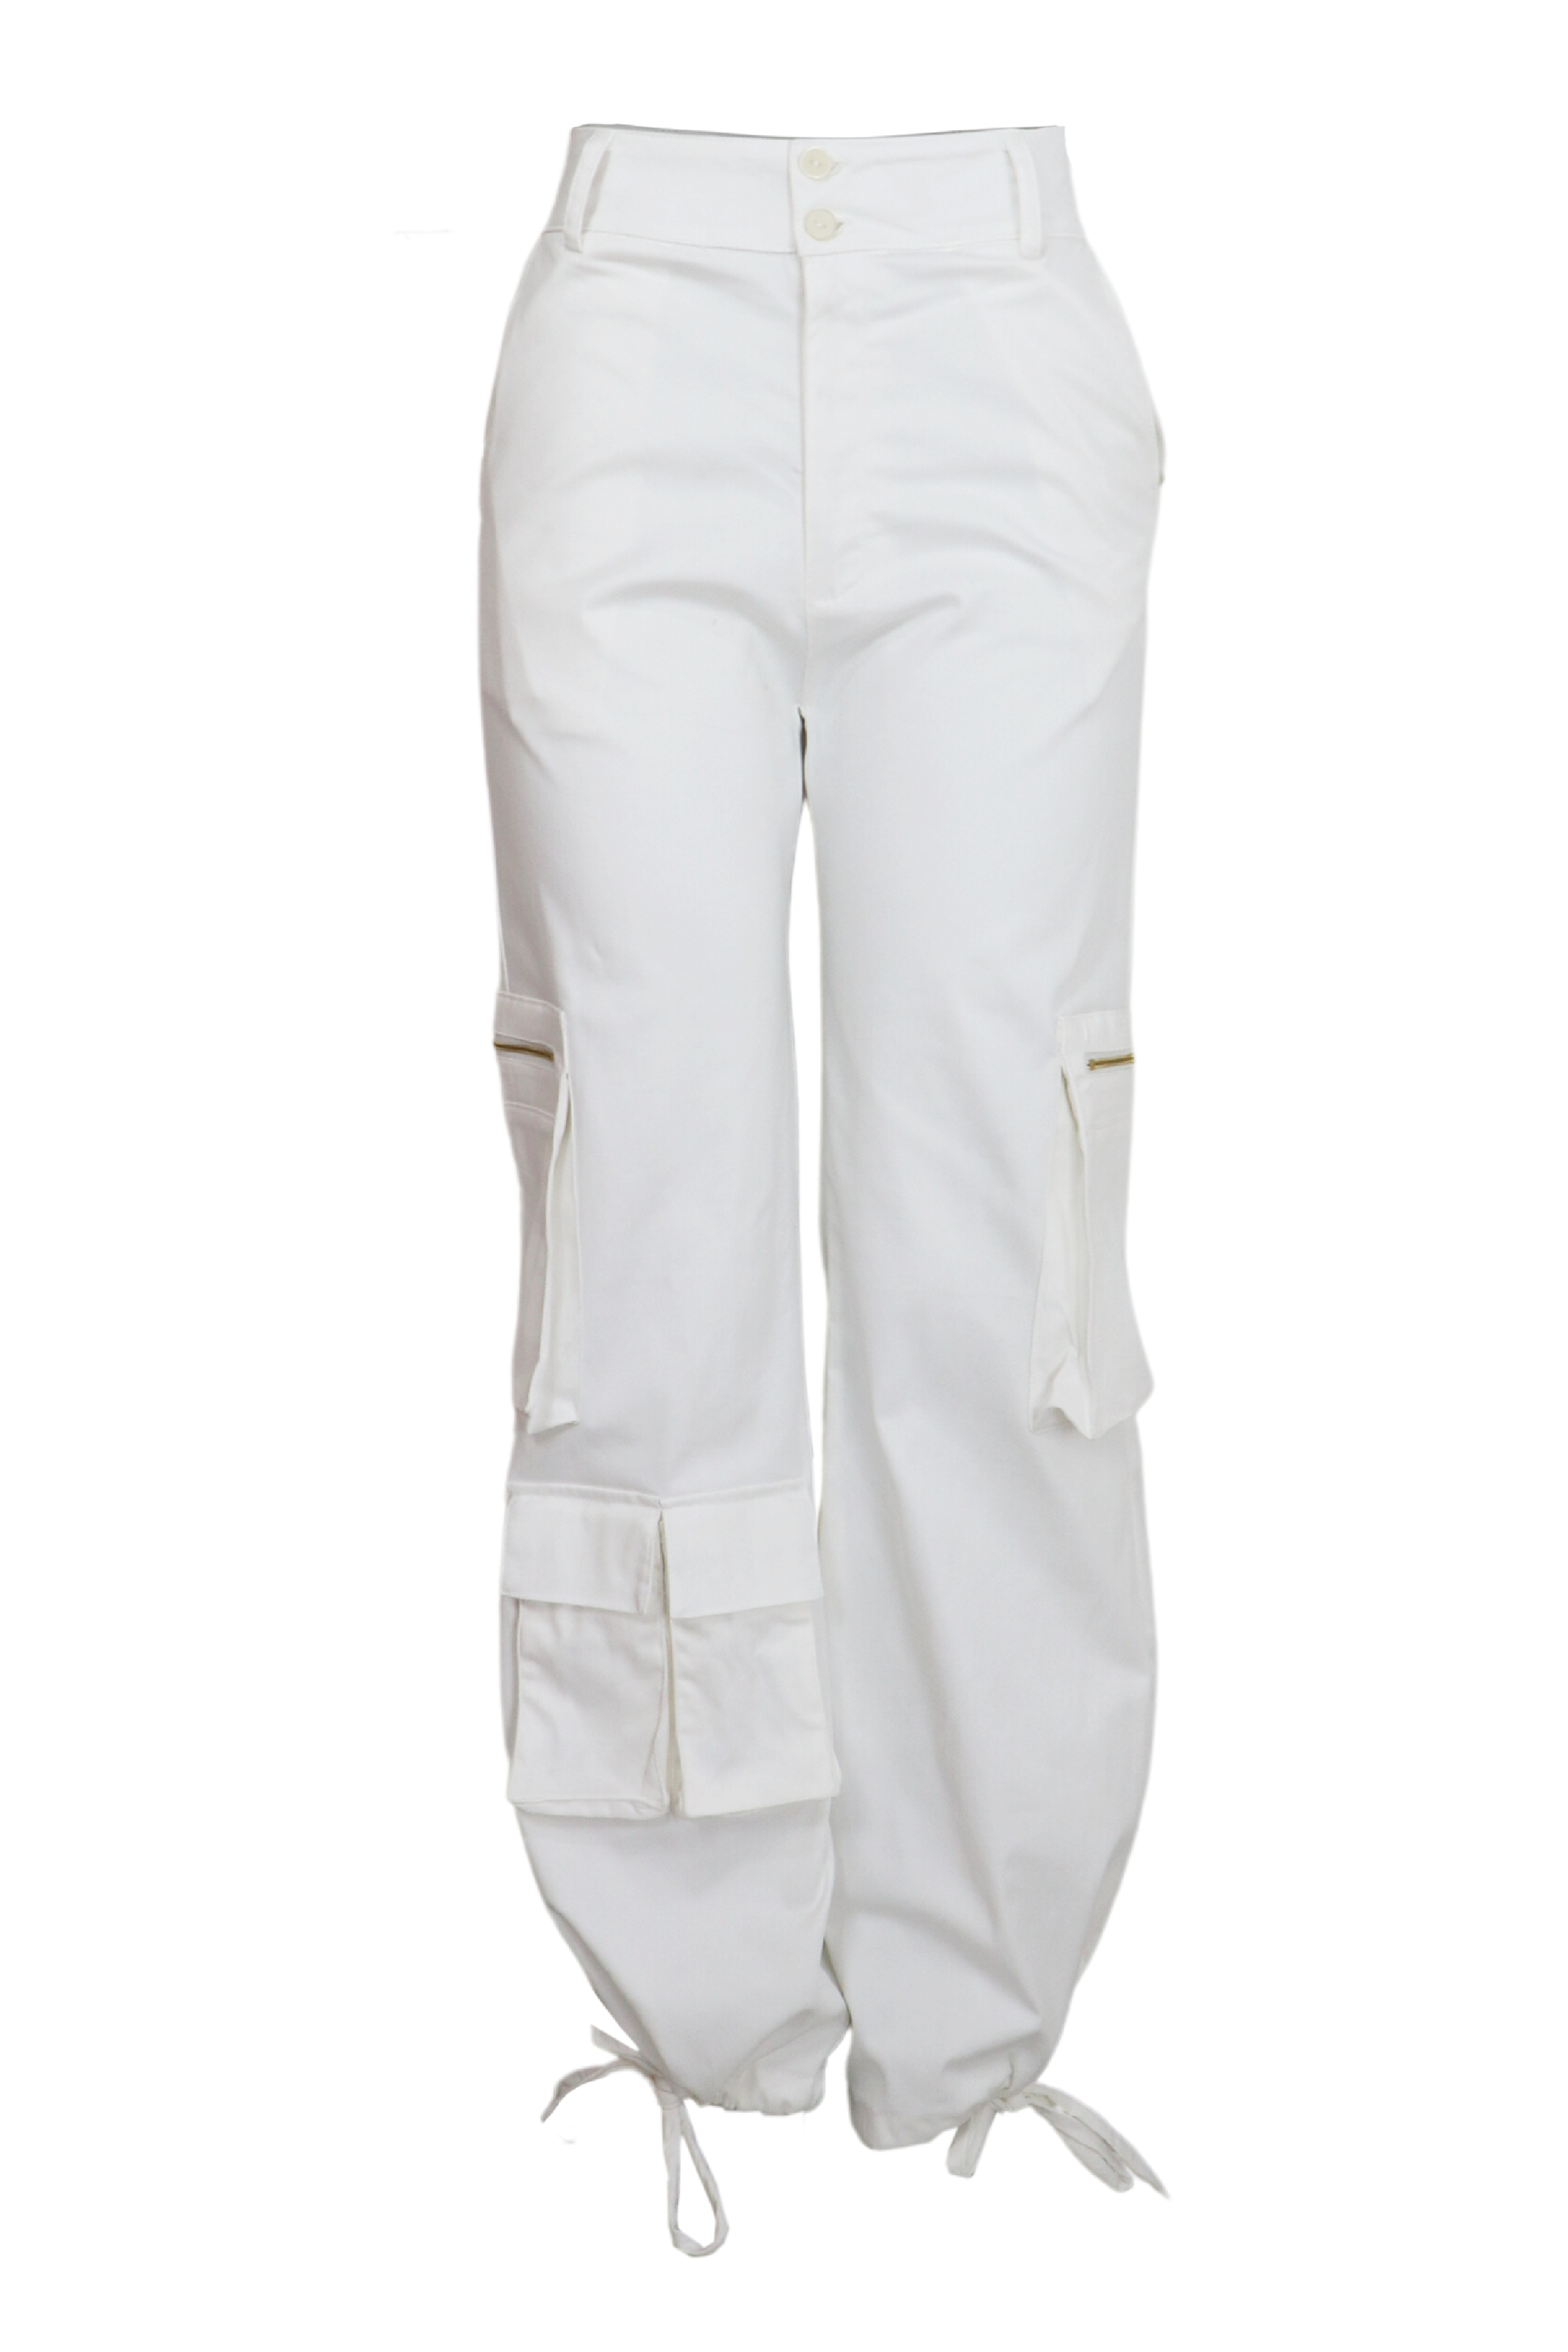 Pantalón cargo con amarre en bota color blanco